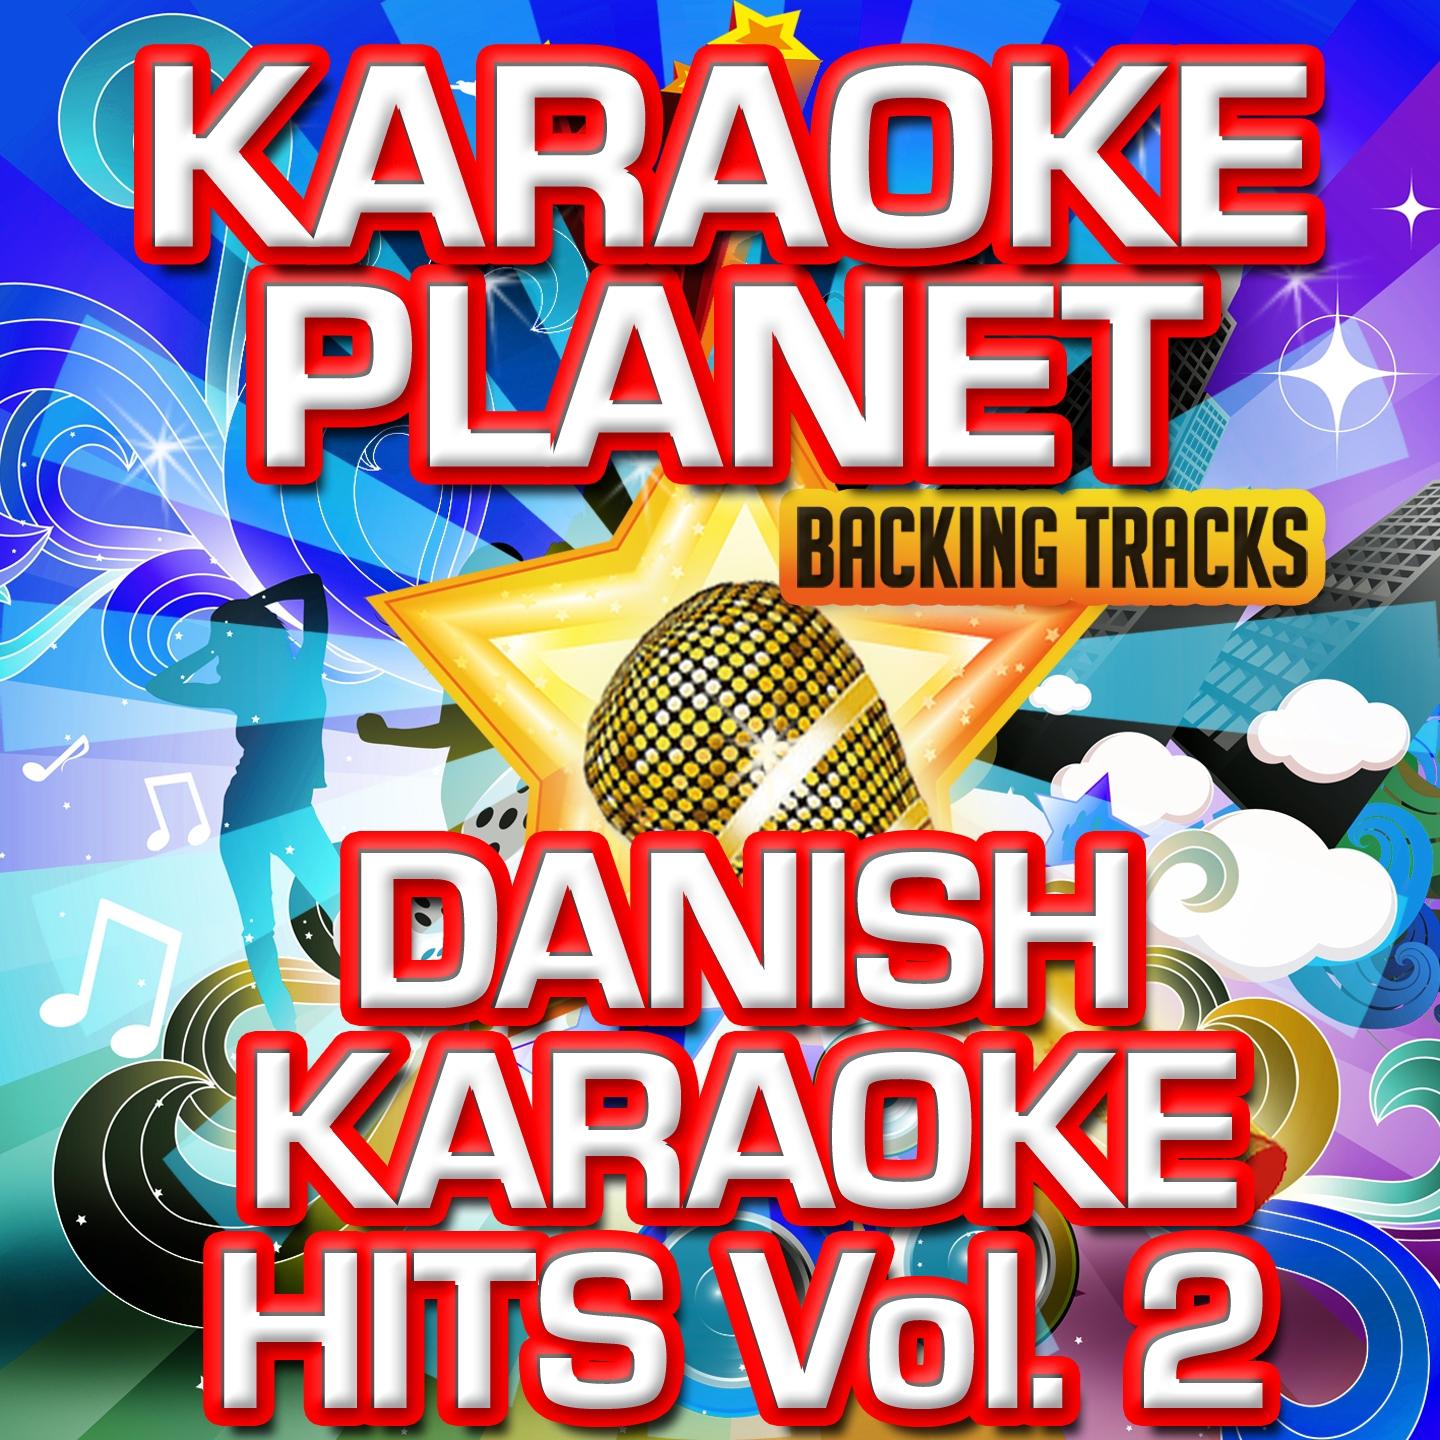 Danish Karaoke Hits, Vol. 2